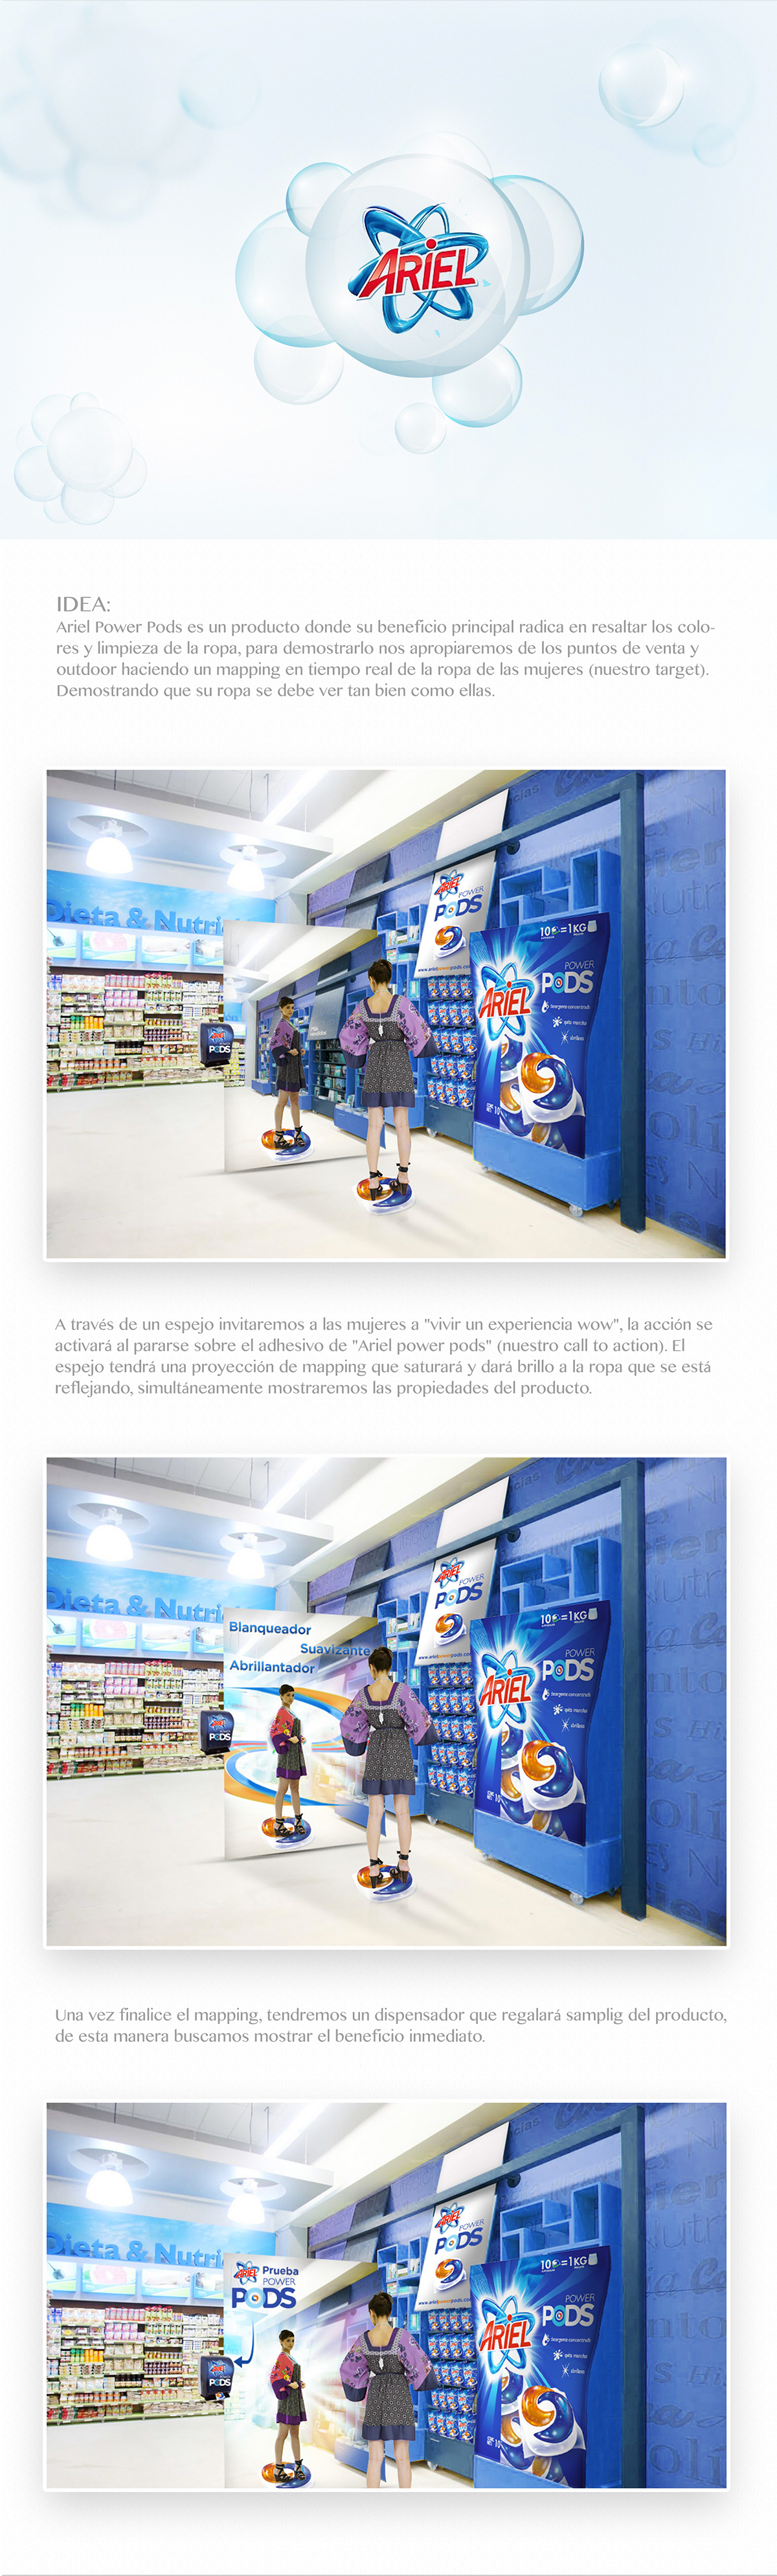 mafiu ARIEL Powerpods supermercado digital espejo idea